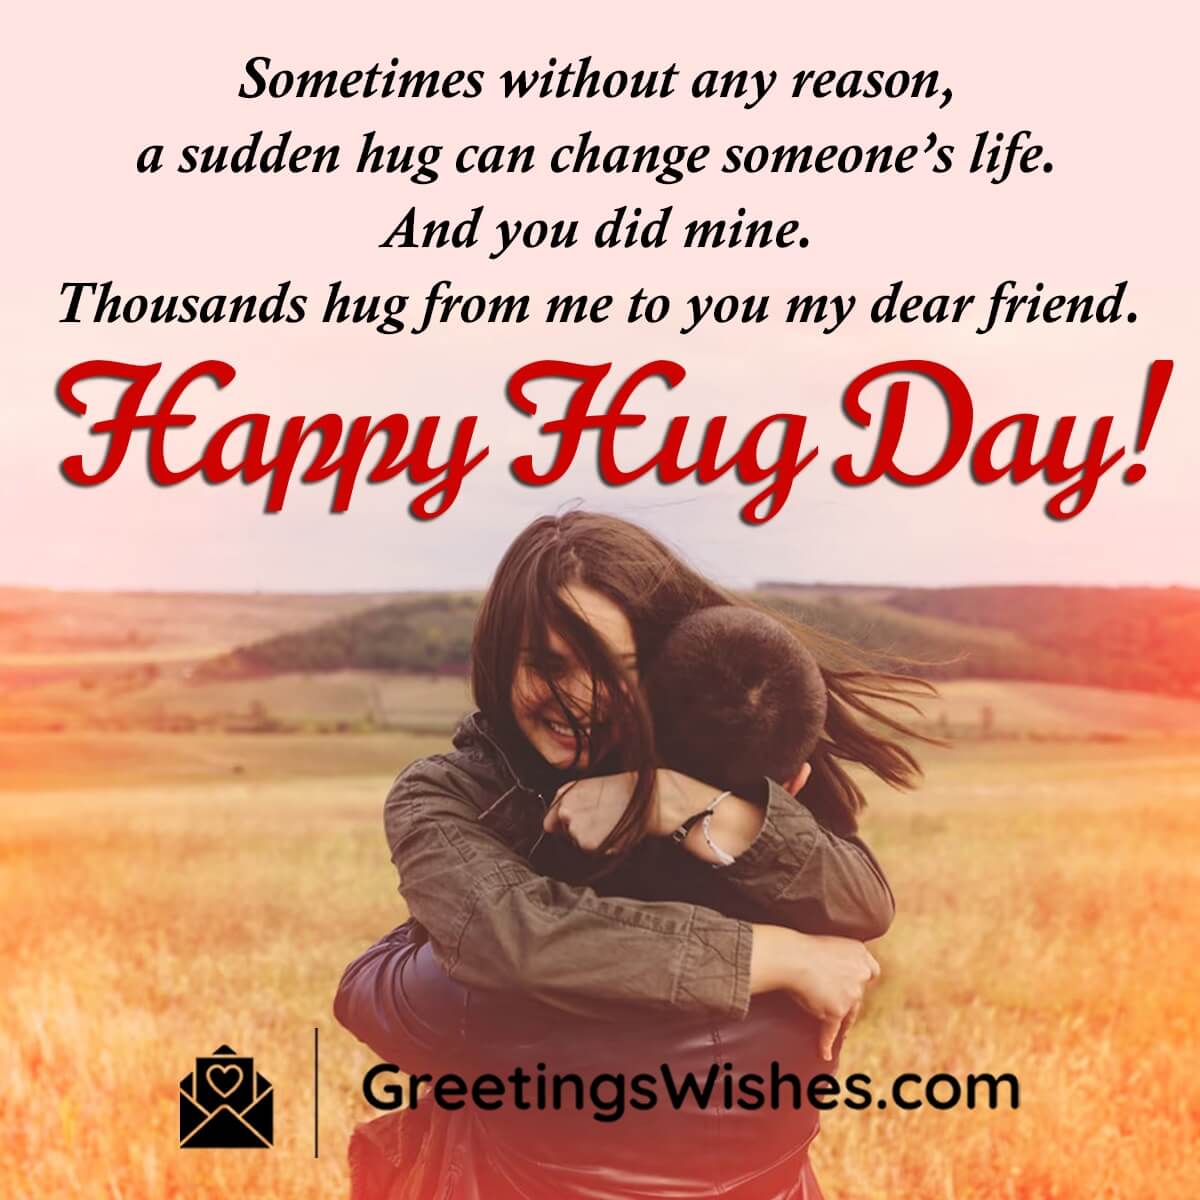 Happy Hug Day Dear Friend